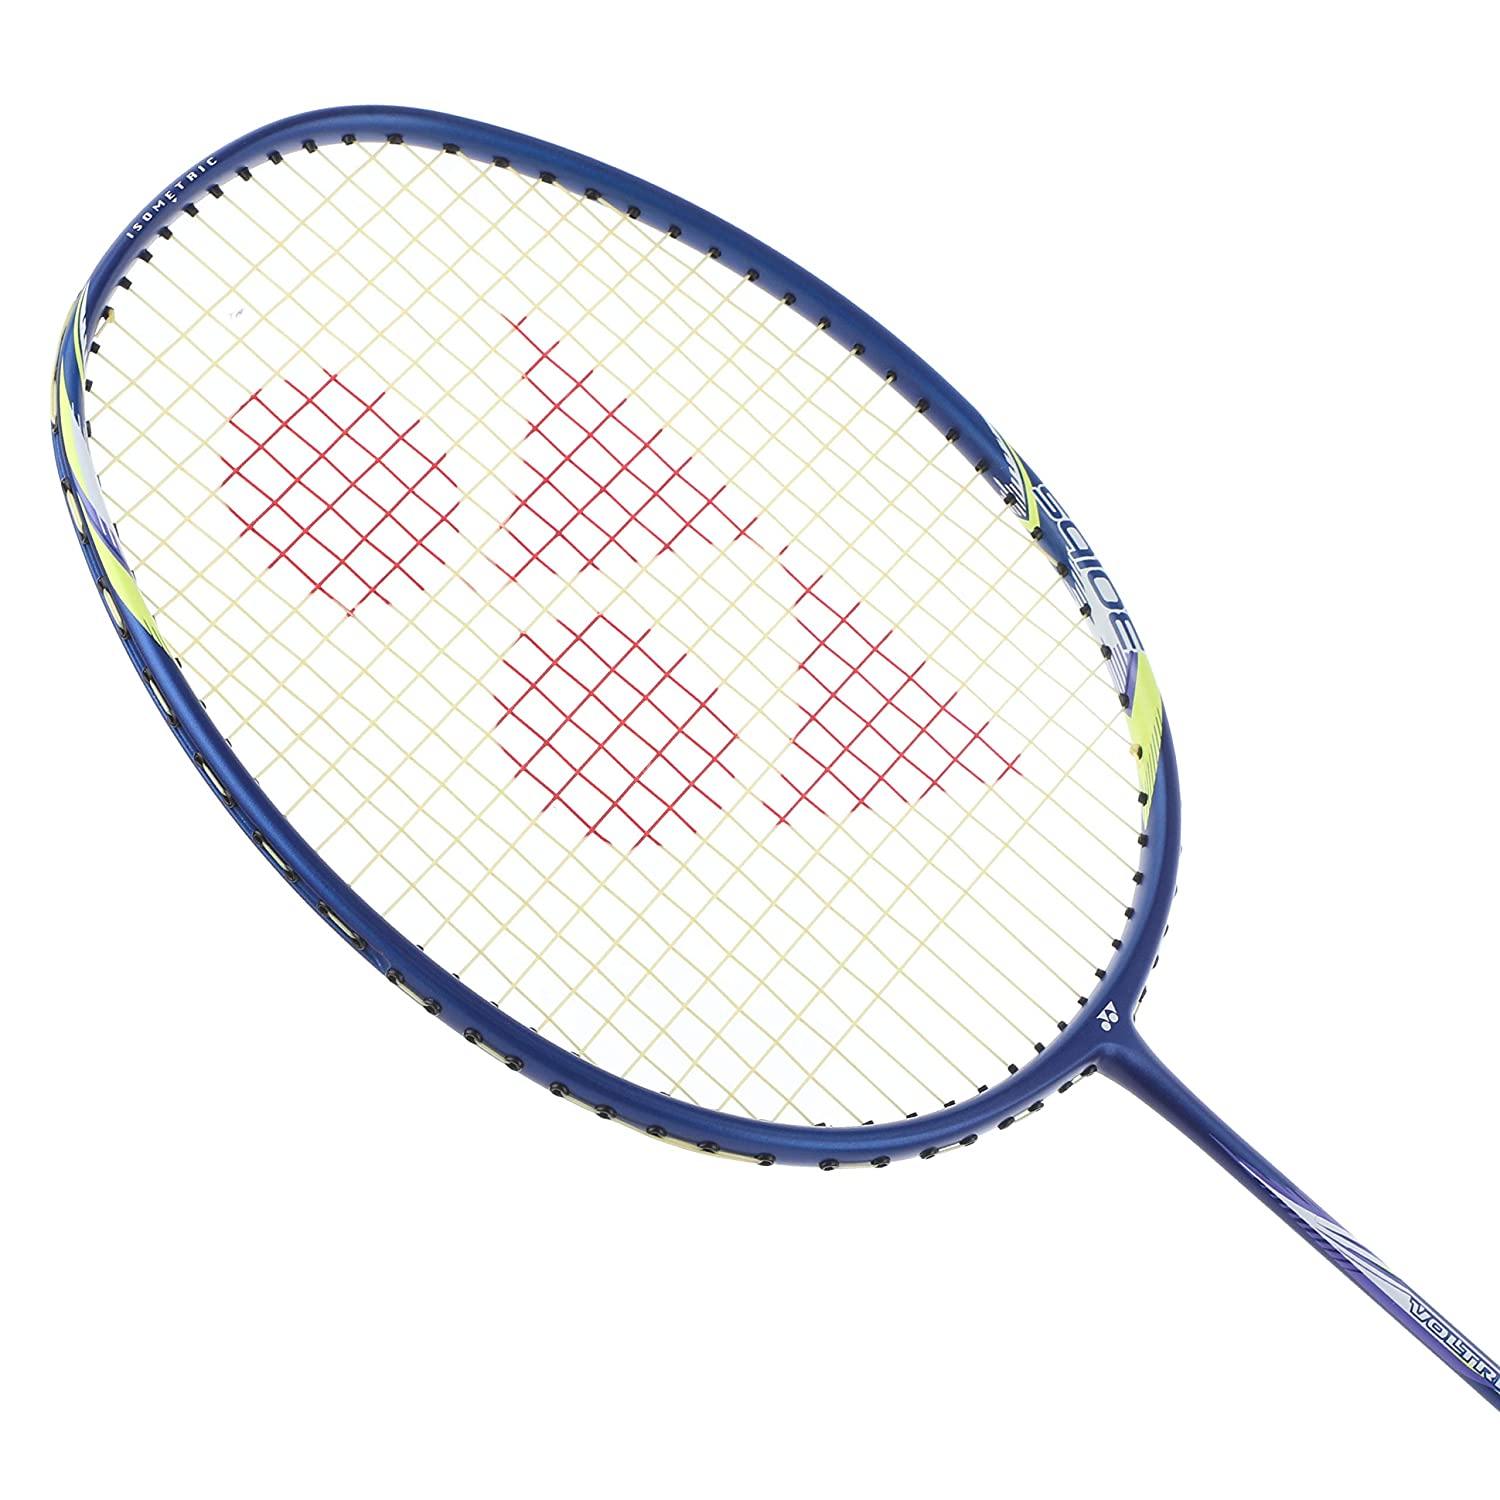 Yonex Voltric Lite 20i Unstrung Graphite Badminton Racquet (78g, 30 lbs Tension) - Best Price online Prokicksports.com